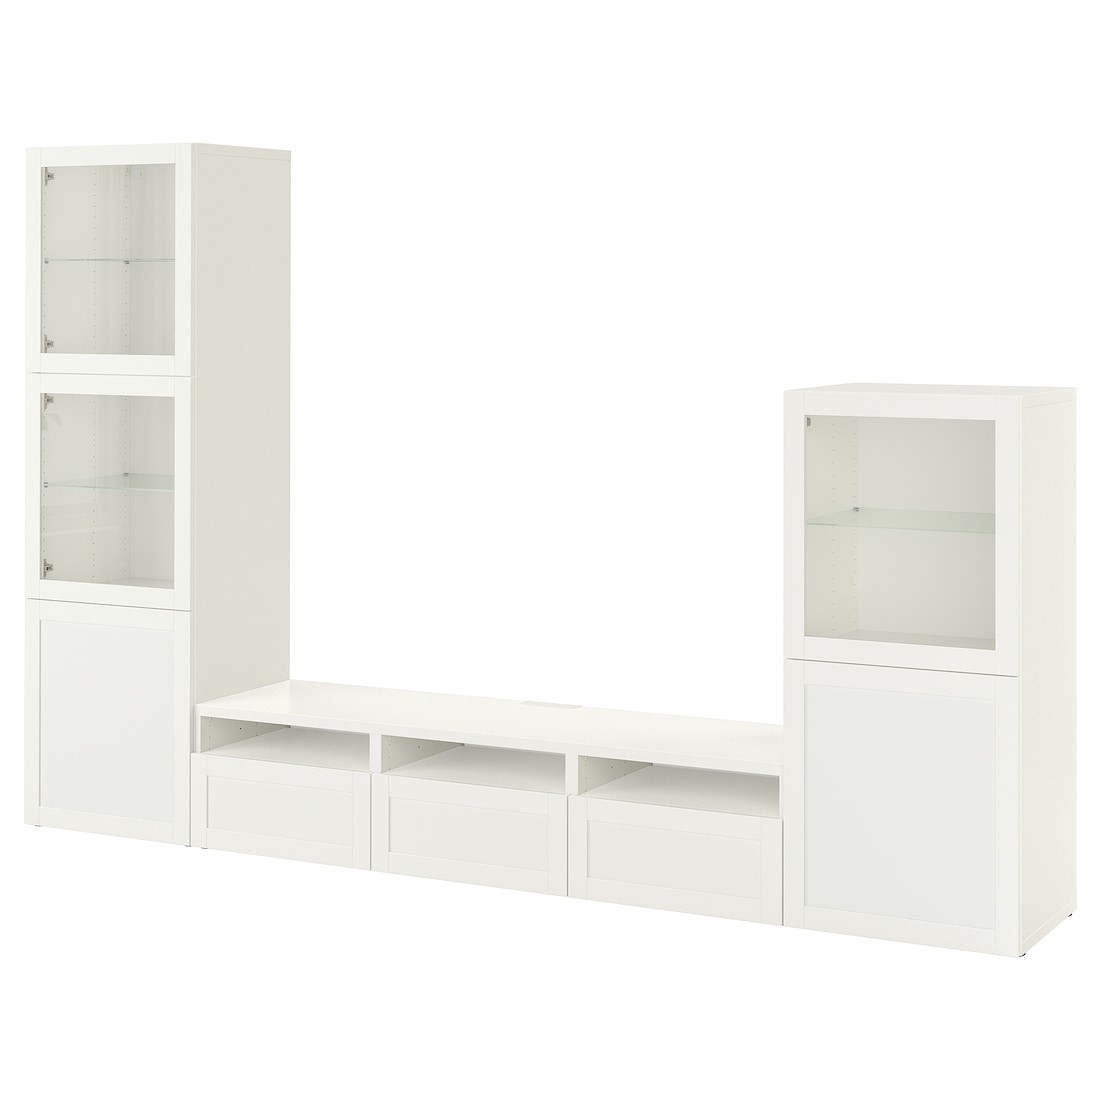 IKEA BESTÅ БЕСТО Комбинация для ТВ / стеклянные двери, белый / Hanviken белый стекло прозрачное, 300x42x193 см 99406384 994.063.84